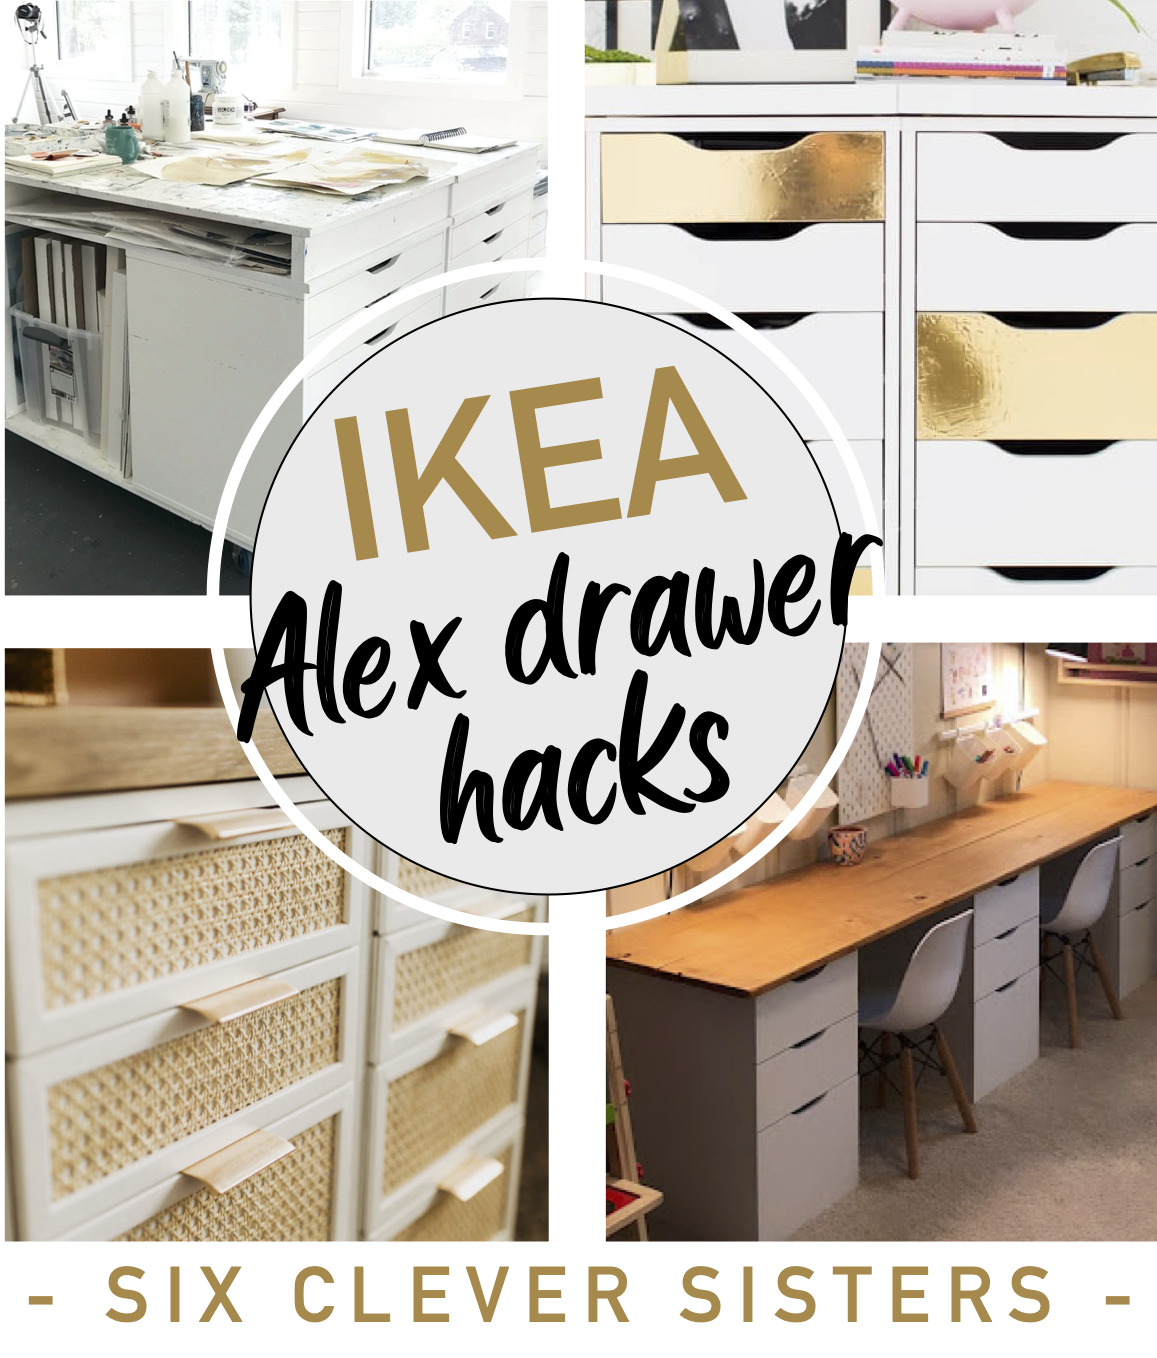 https://www.sixcleversisters.com/wp-content/uploads/2022/09/Ikea-Alex-drawer-hacks.jpg